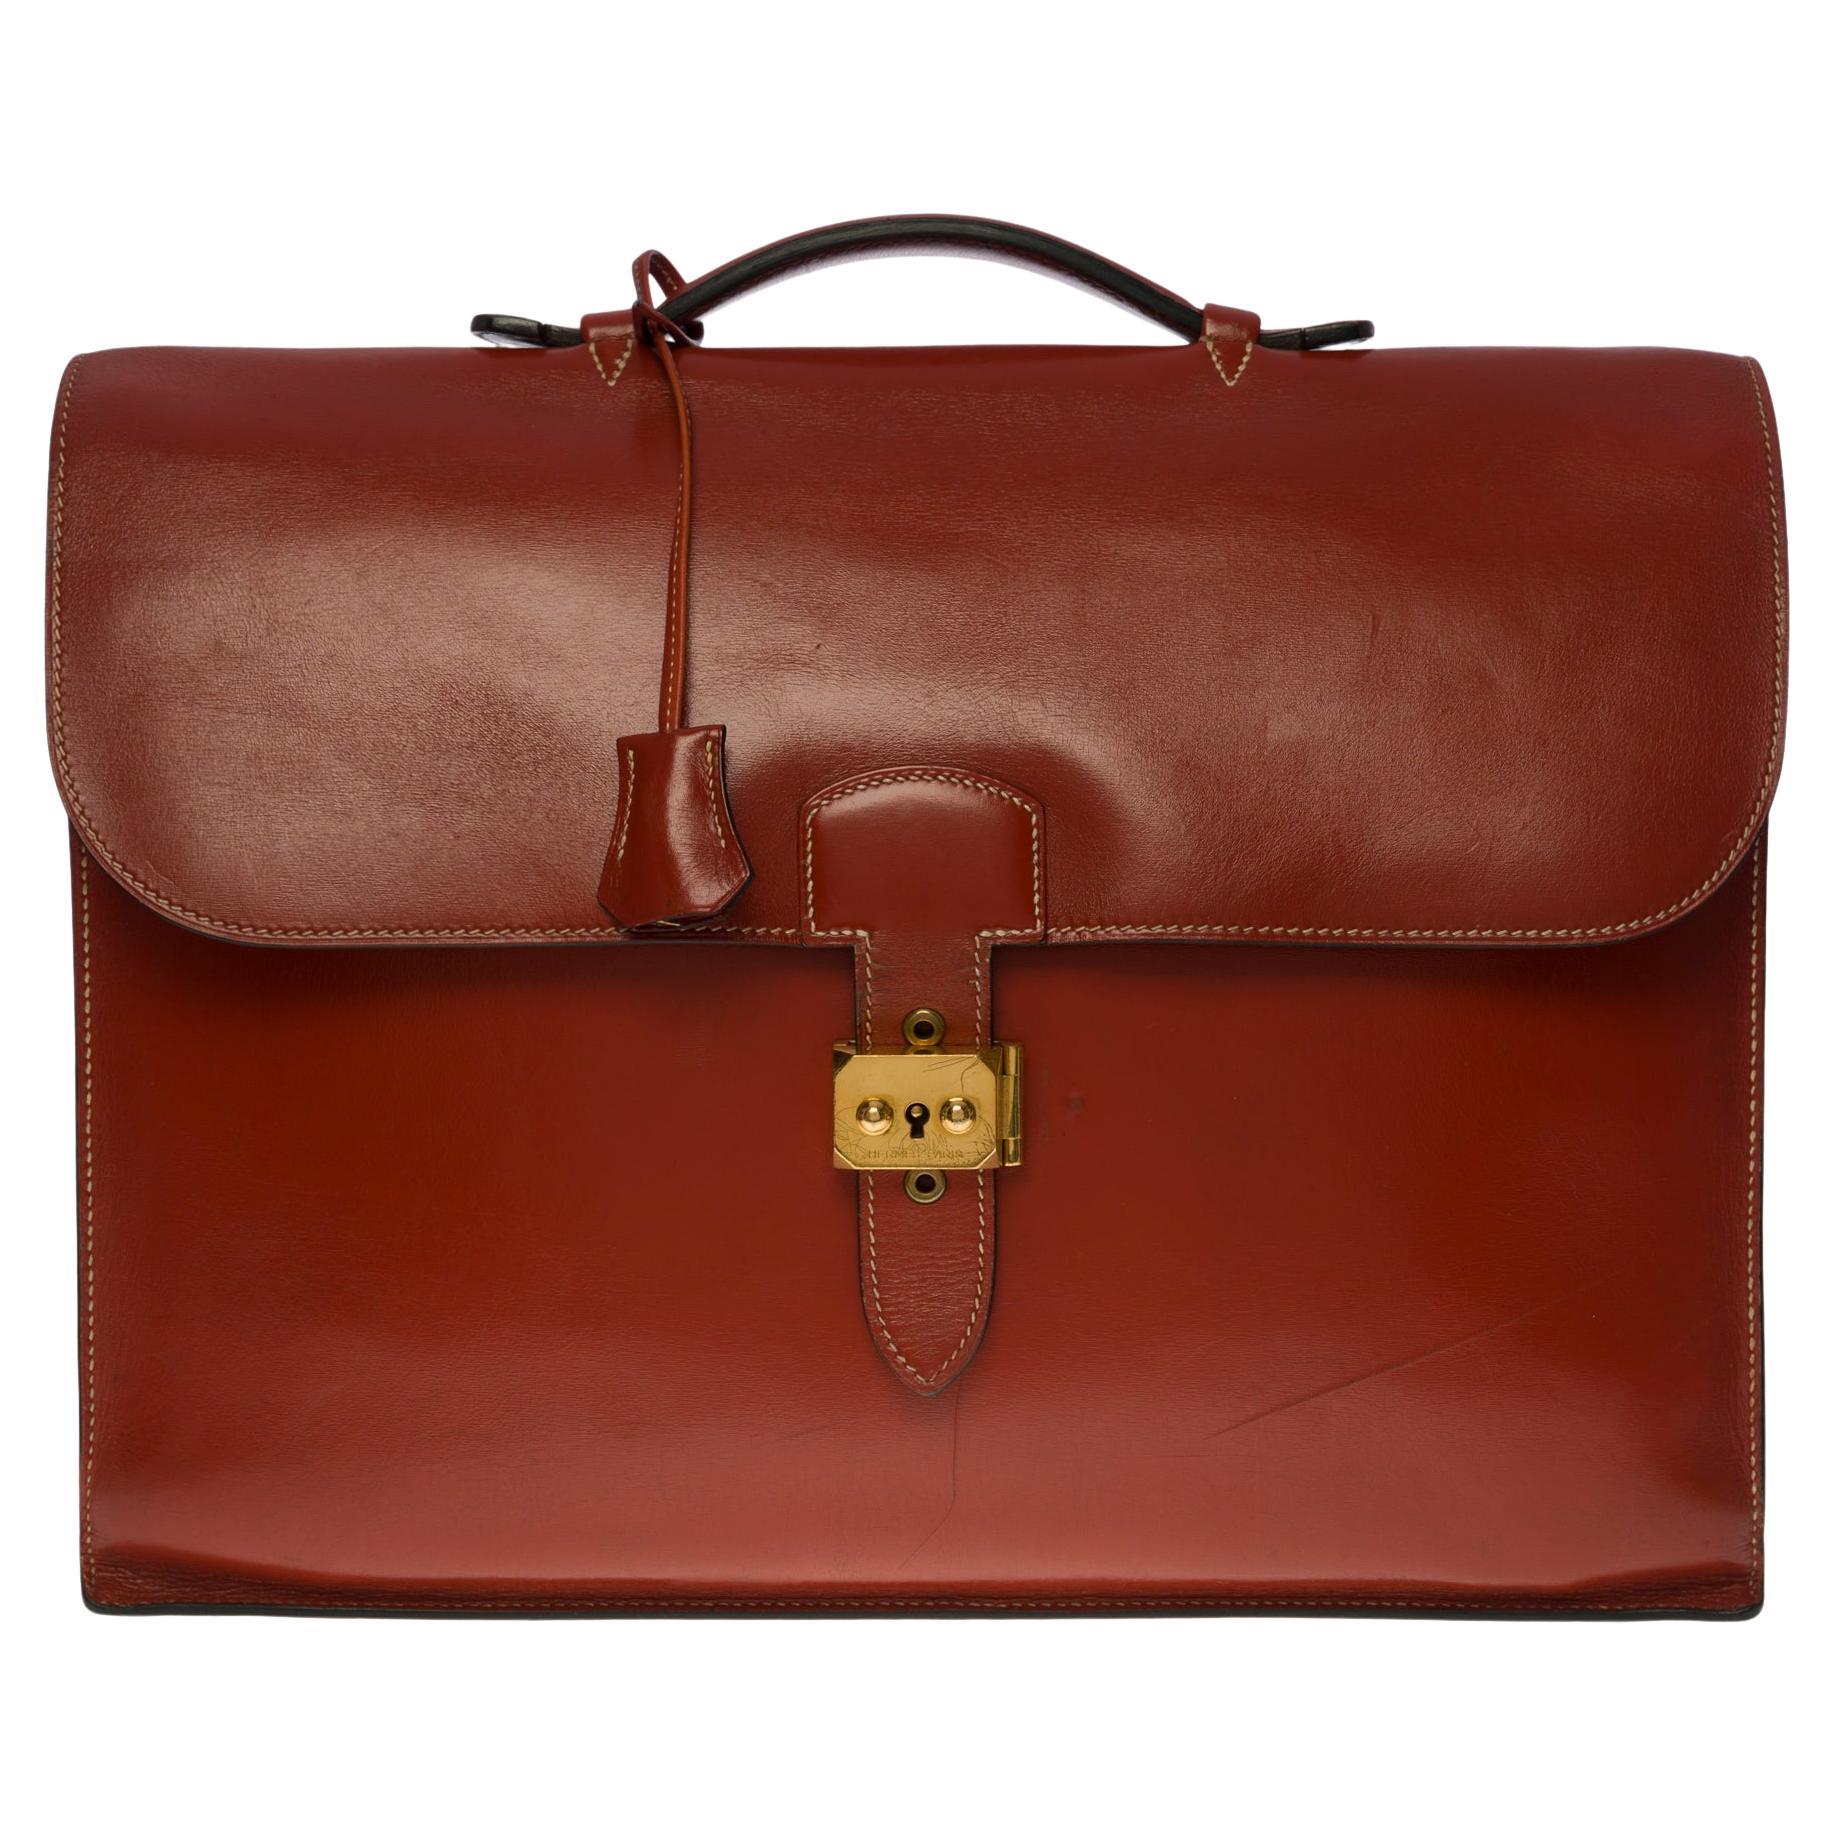 Rare Hermès Sac à dépêches briefcase in Rouge brique calf box leather, GHW